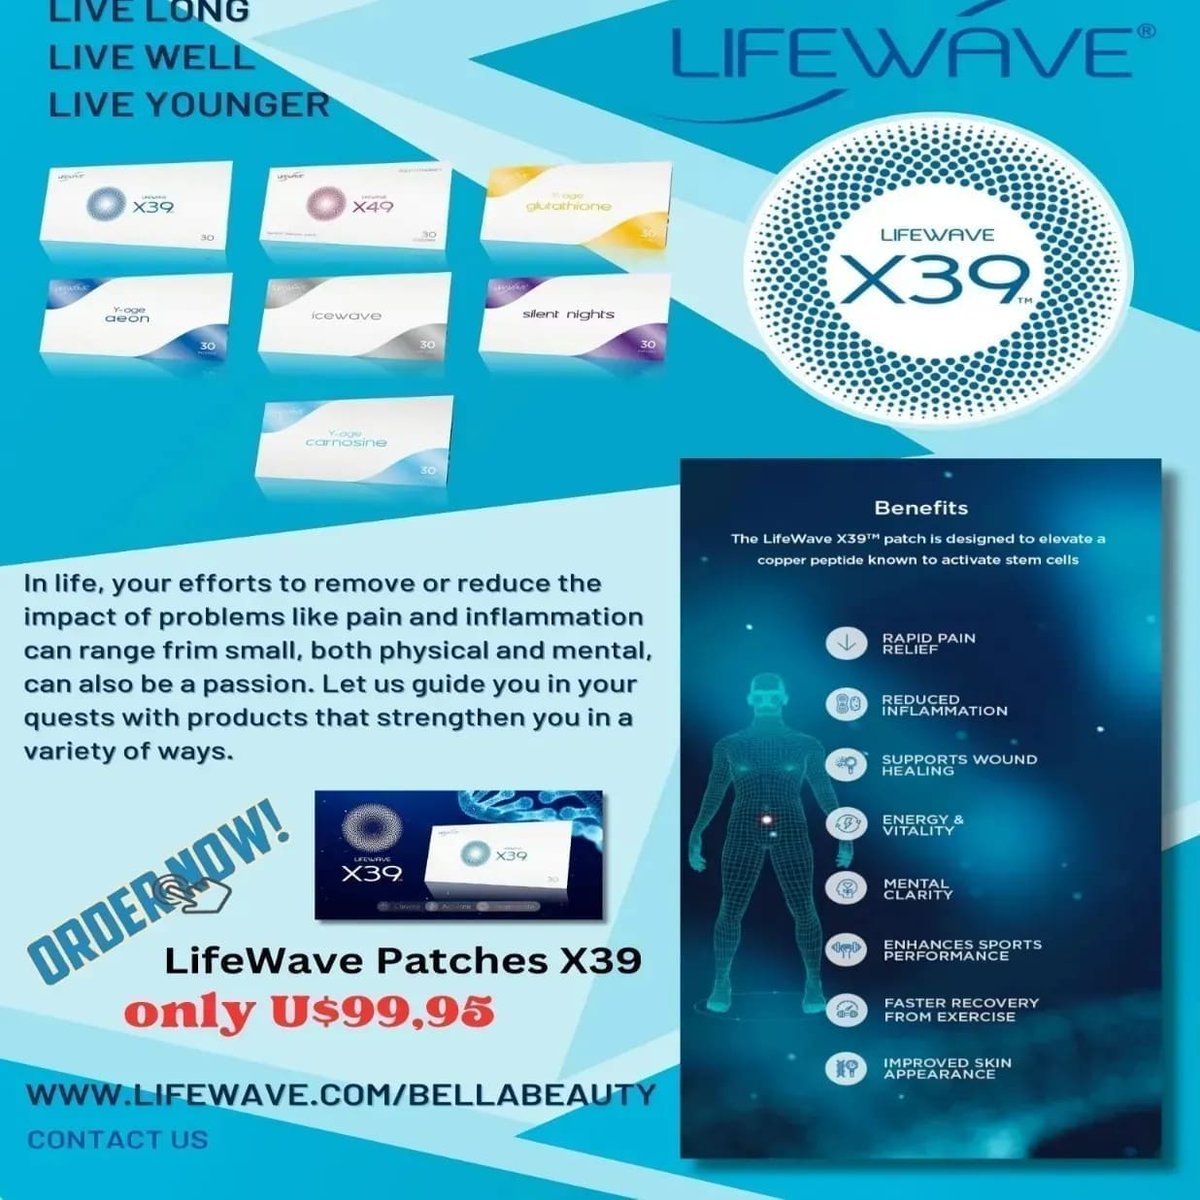 lifewave.com/bellabeauty #HealthTips #lifewave #saude #x39